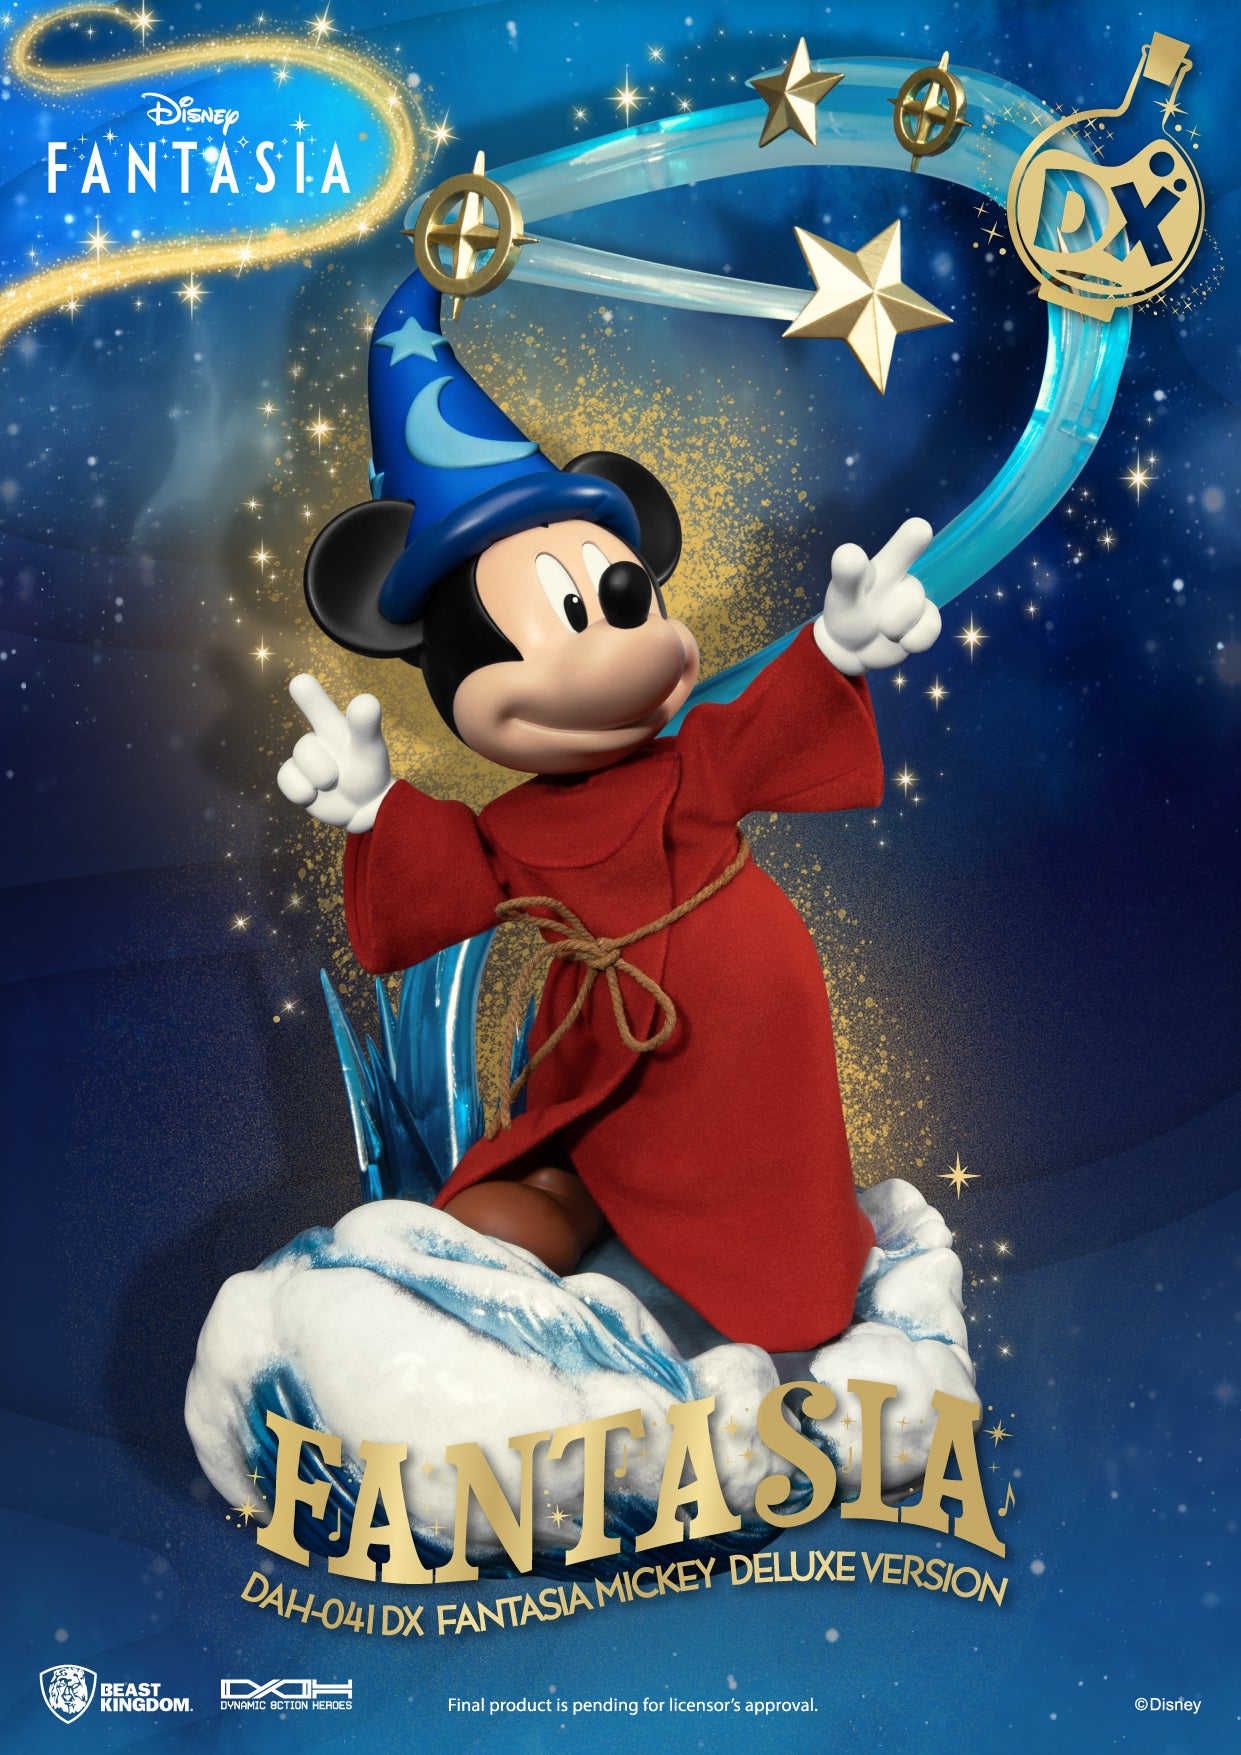 Disney Classic Mickey Fantasia Deluxe Version (Dynamic 8ction Hero) DAH-041DX